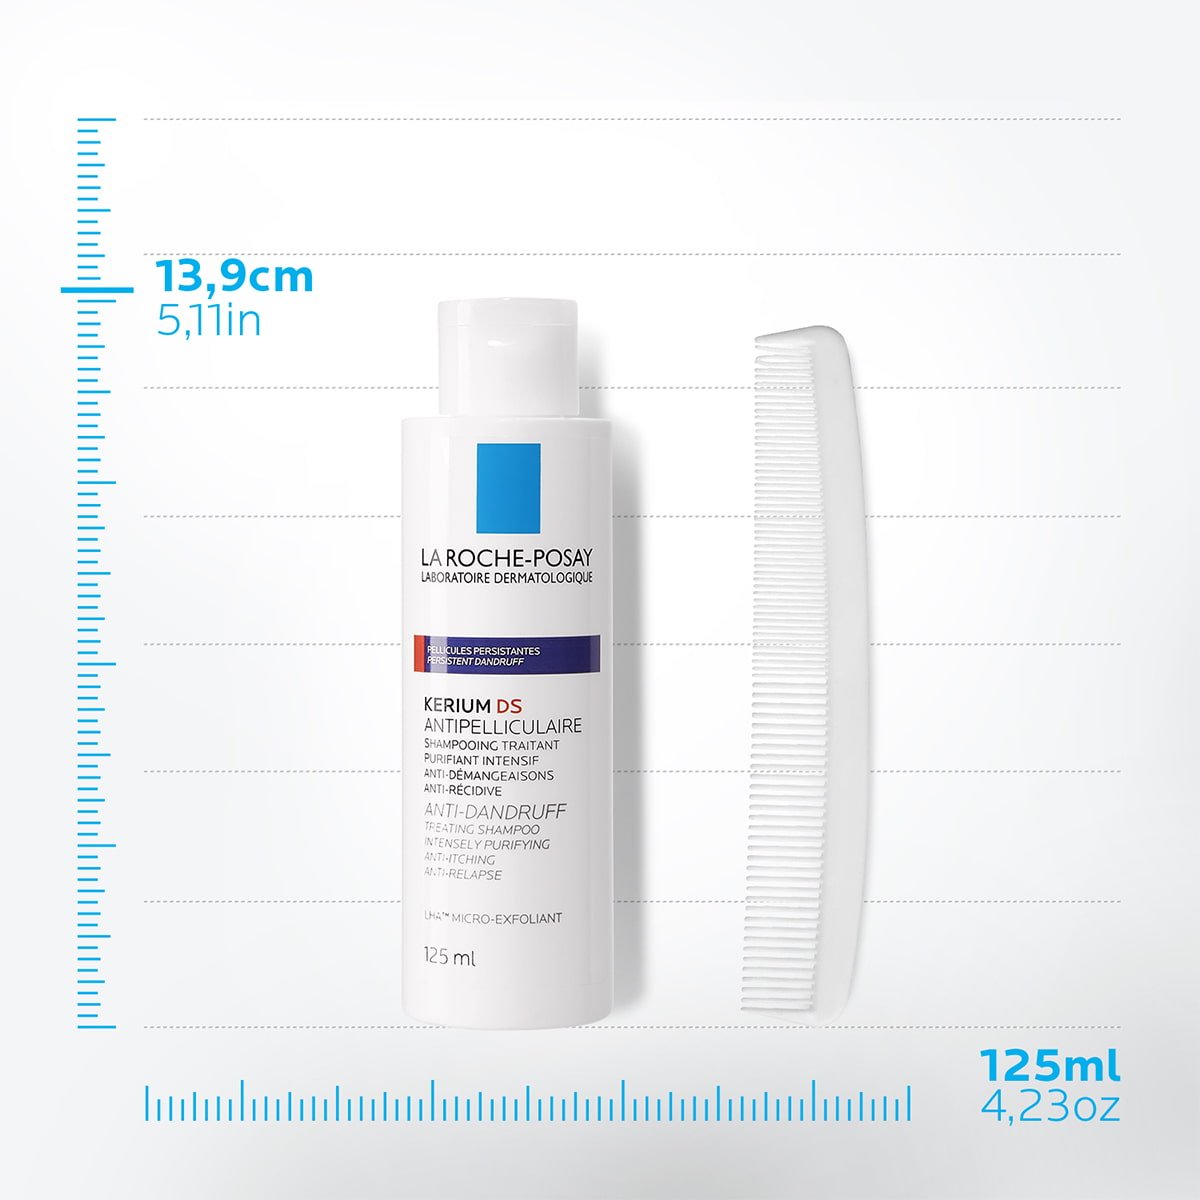 La Roche Posay Produktsida Kerium DS Anti Dandruff Treating Shampoo